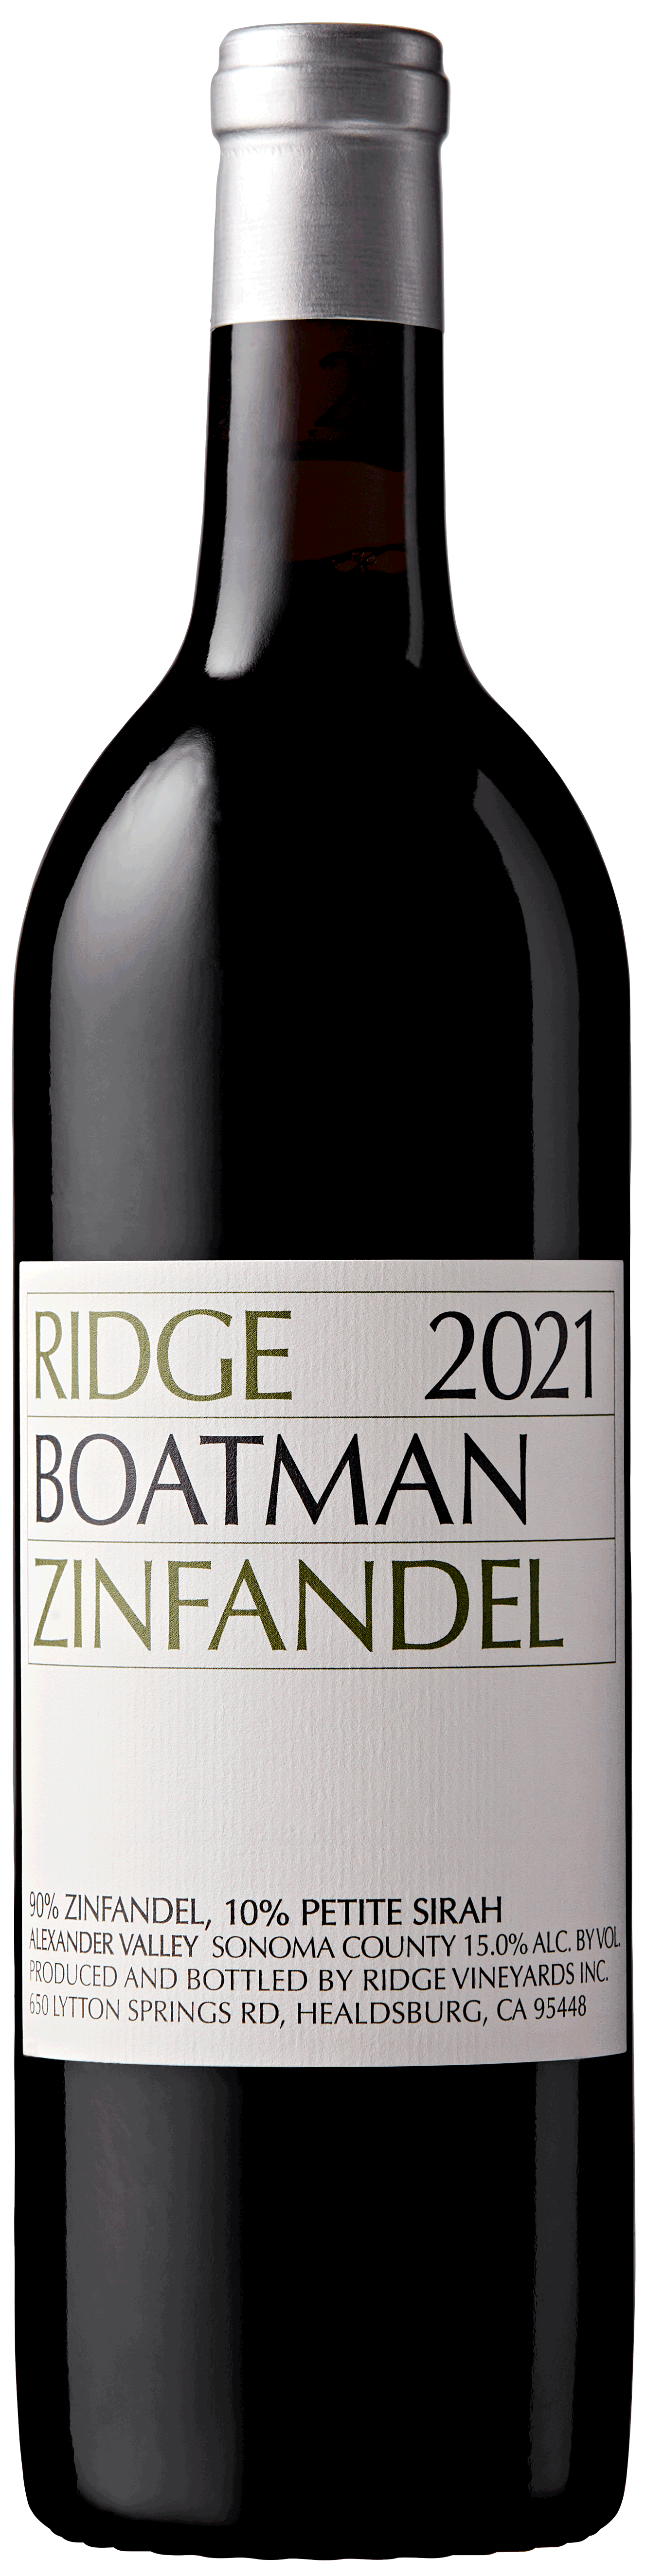 2021 Boatman Zinfandel